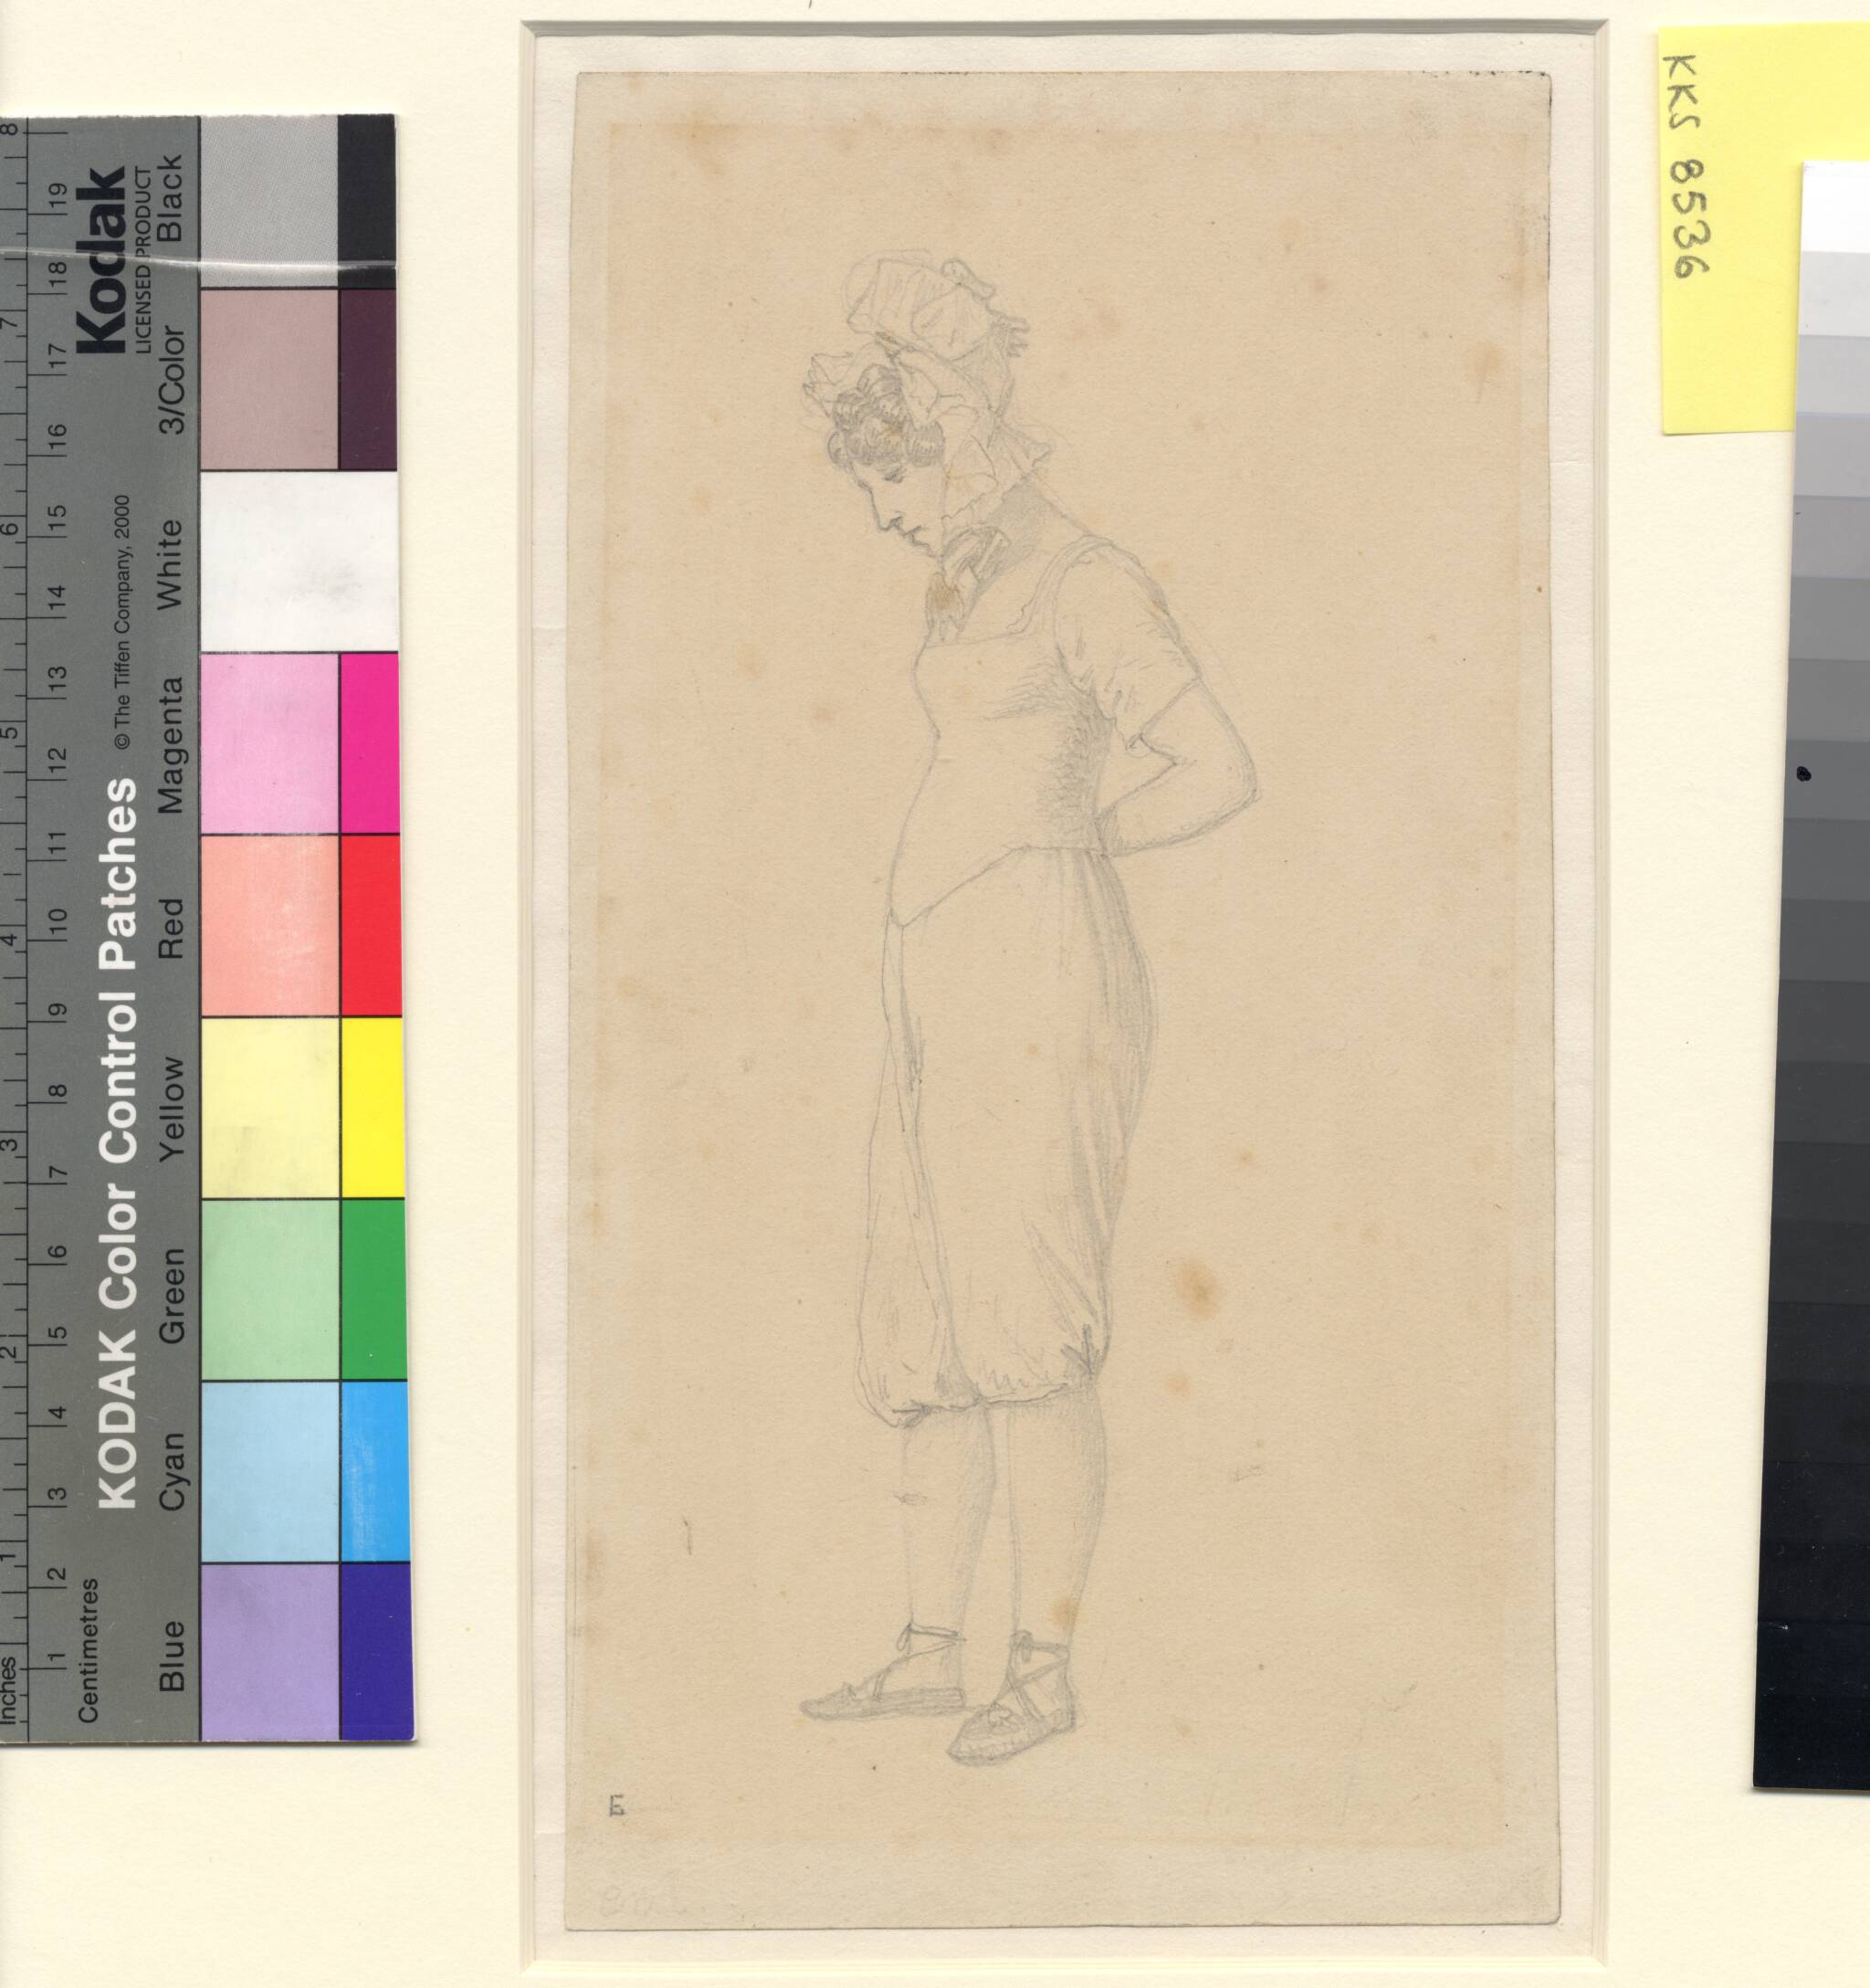 Postimpressionisme billedtekst Sportsmand Stående pige i undertøj., 1800 – 1853, C.W. Eckersberg | SMK Open